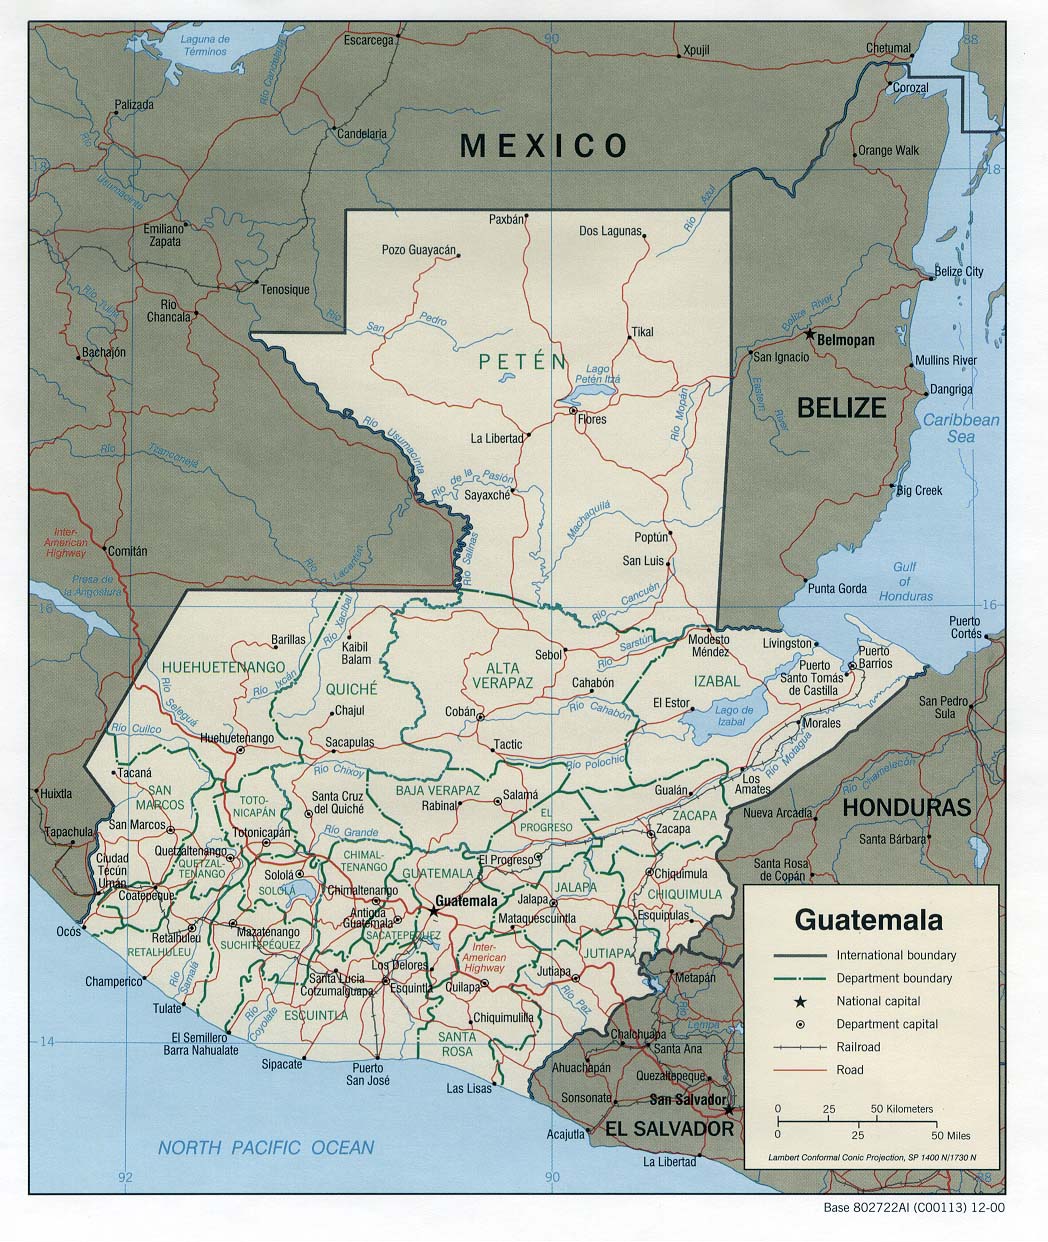 Mapa Político de Guatemala 2000 - Tamaño completo